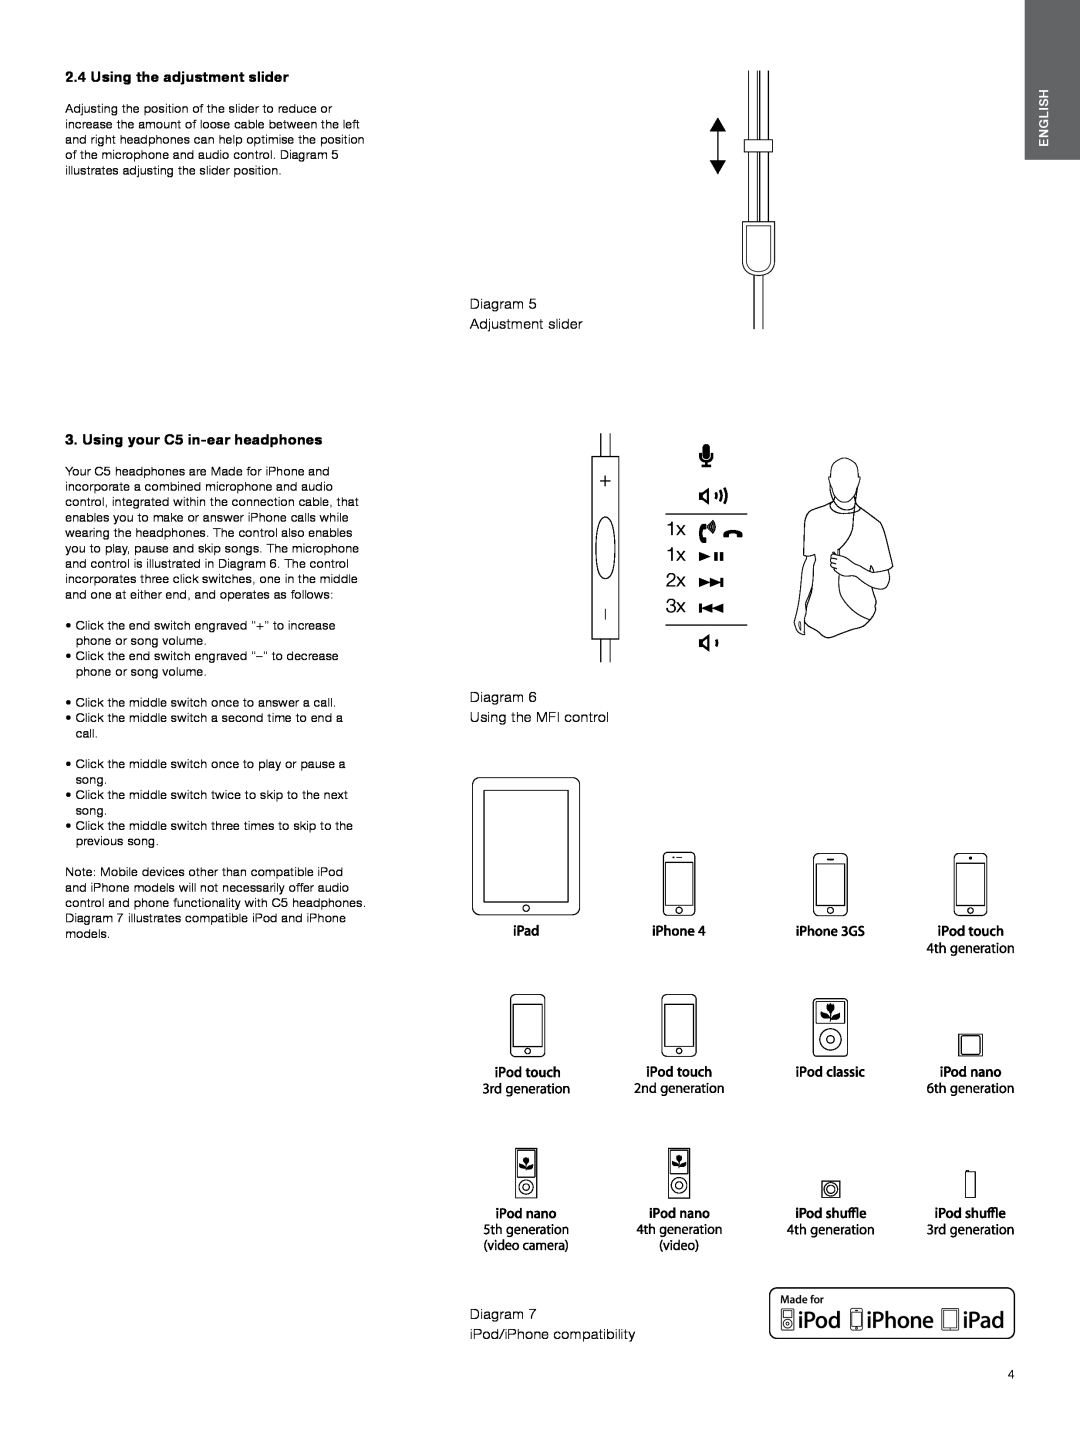 Bowers & Wilkins 1x, Using the adjustment slider, Using your C5 in-earheadphones, Diagram Adjustment slider, English 